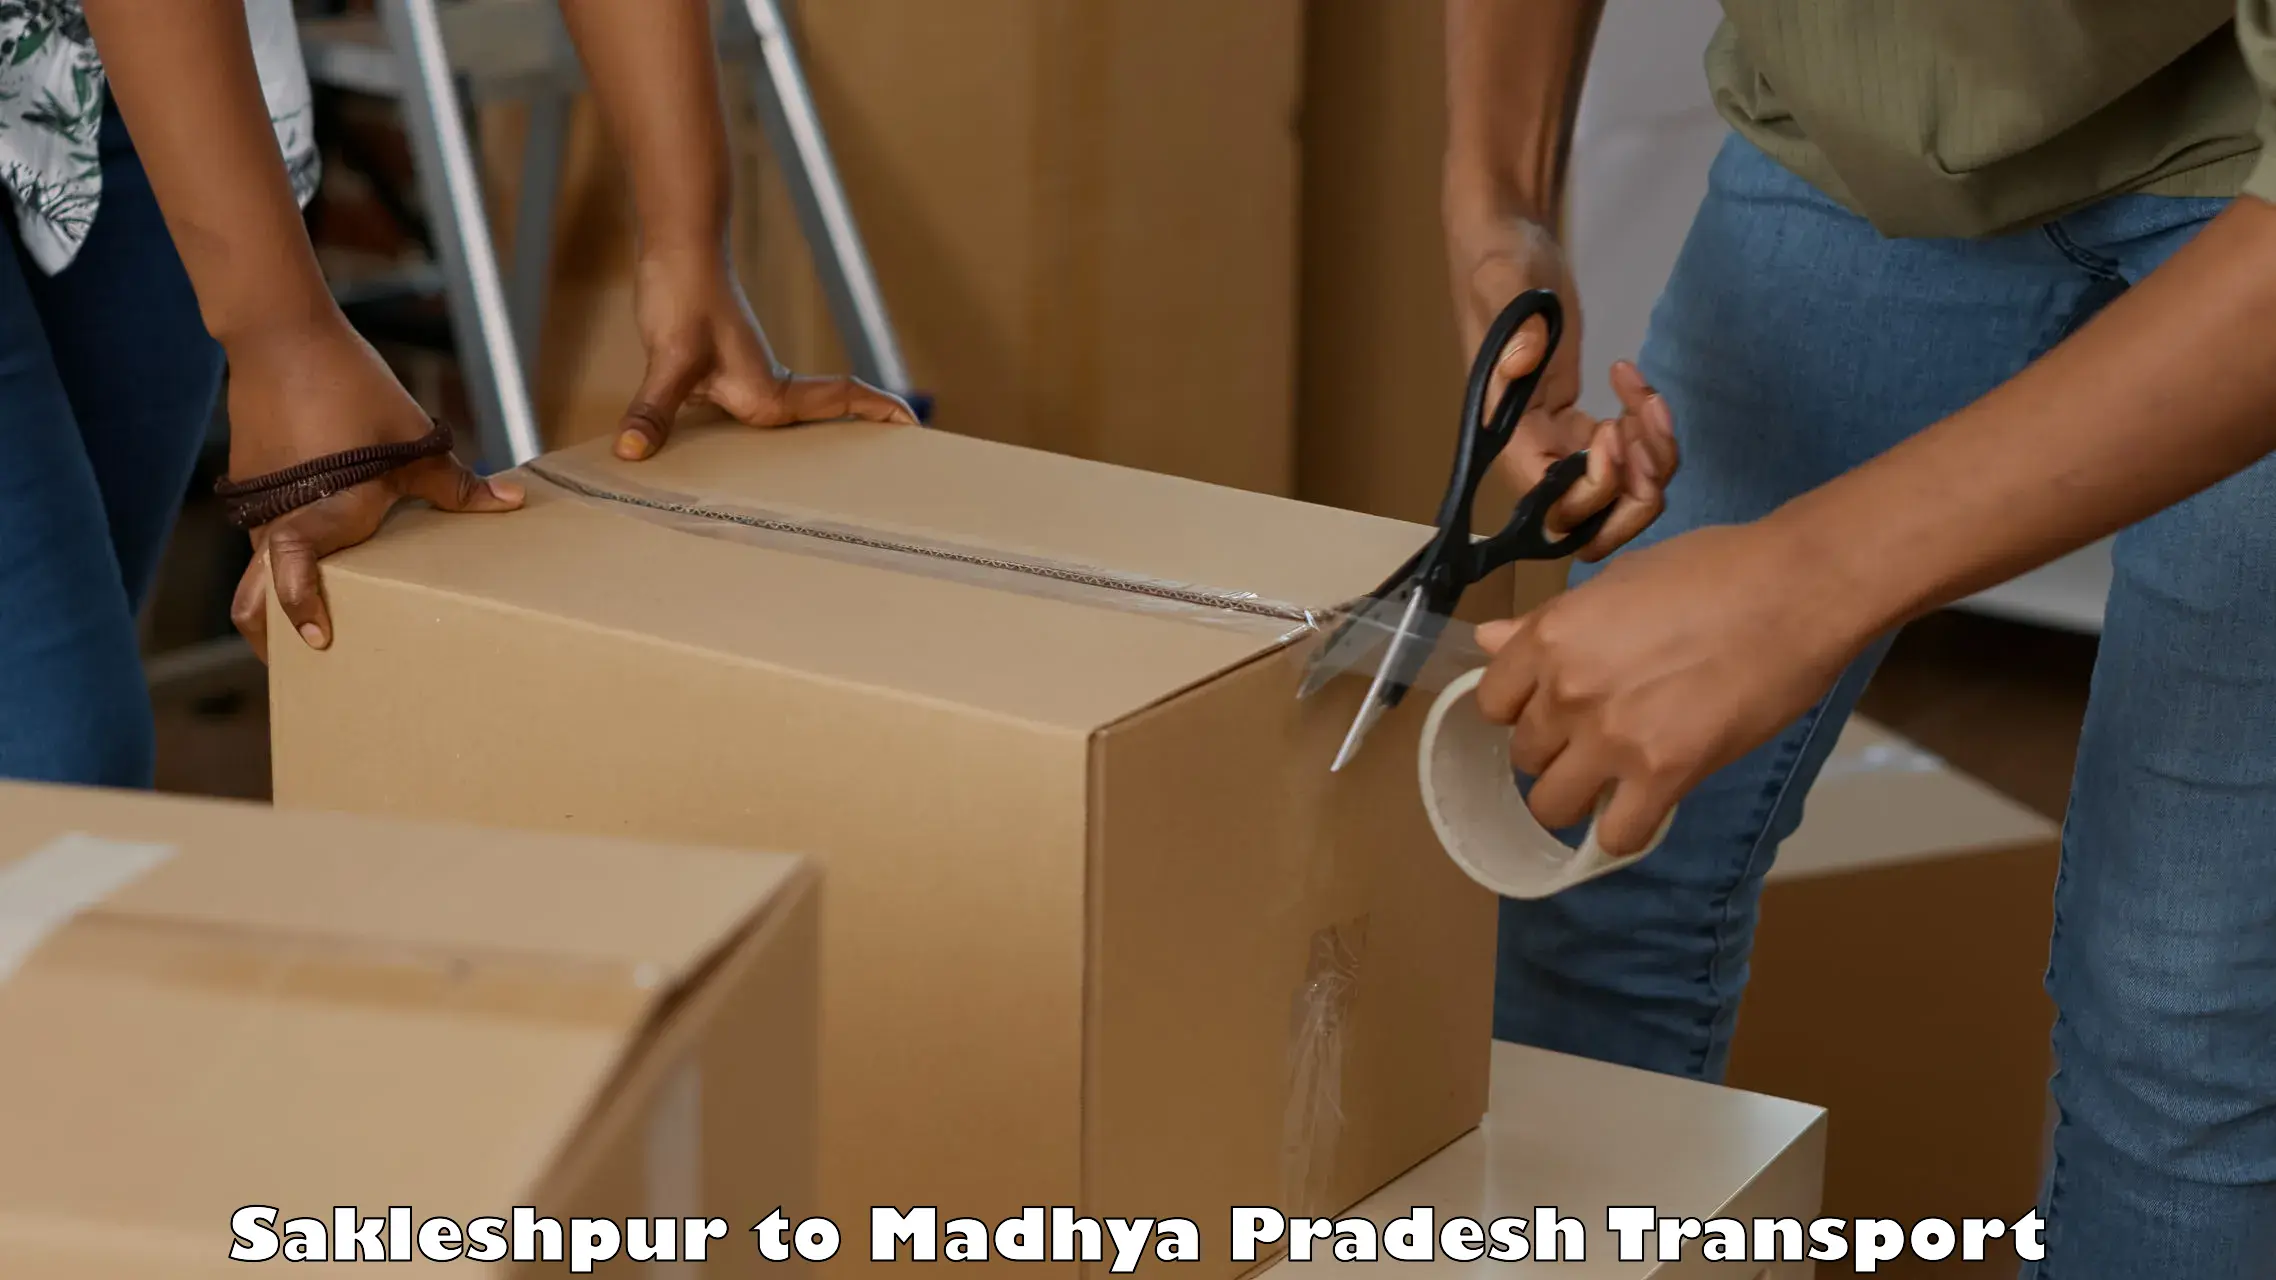 Delivery service Sakleshpur to Garoth